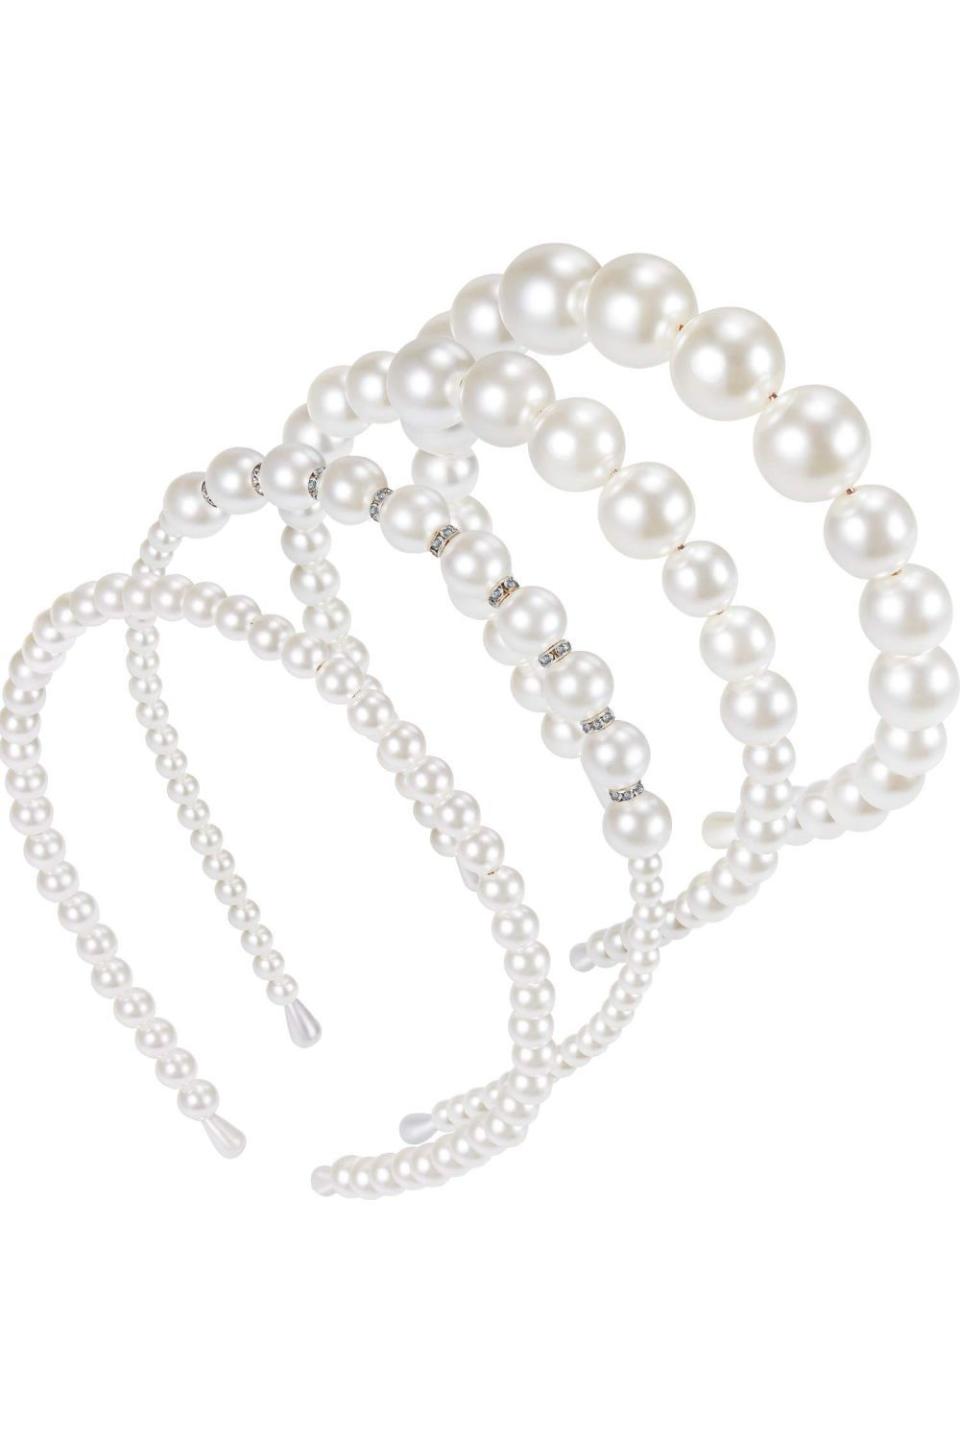 24) Wilibond 4-Pieces Pearls Headbands